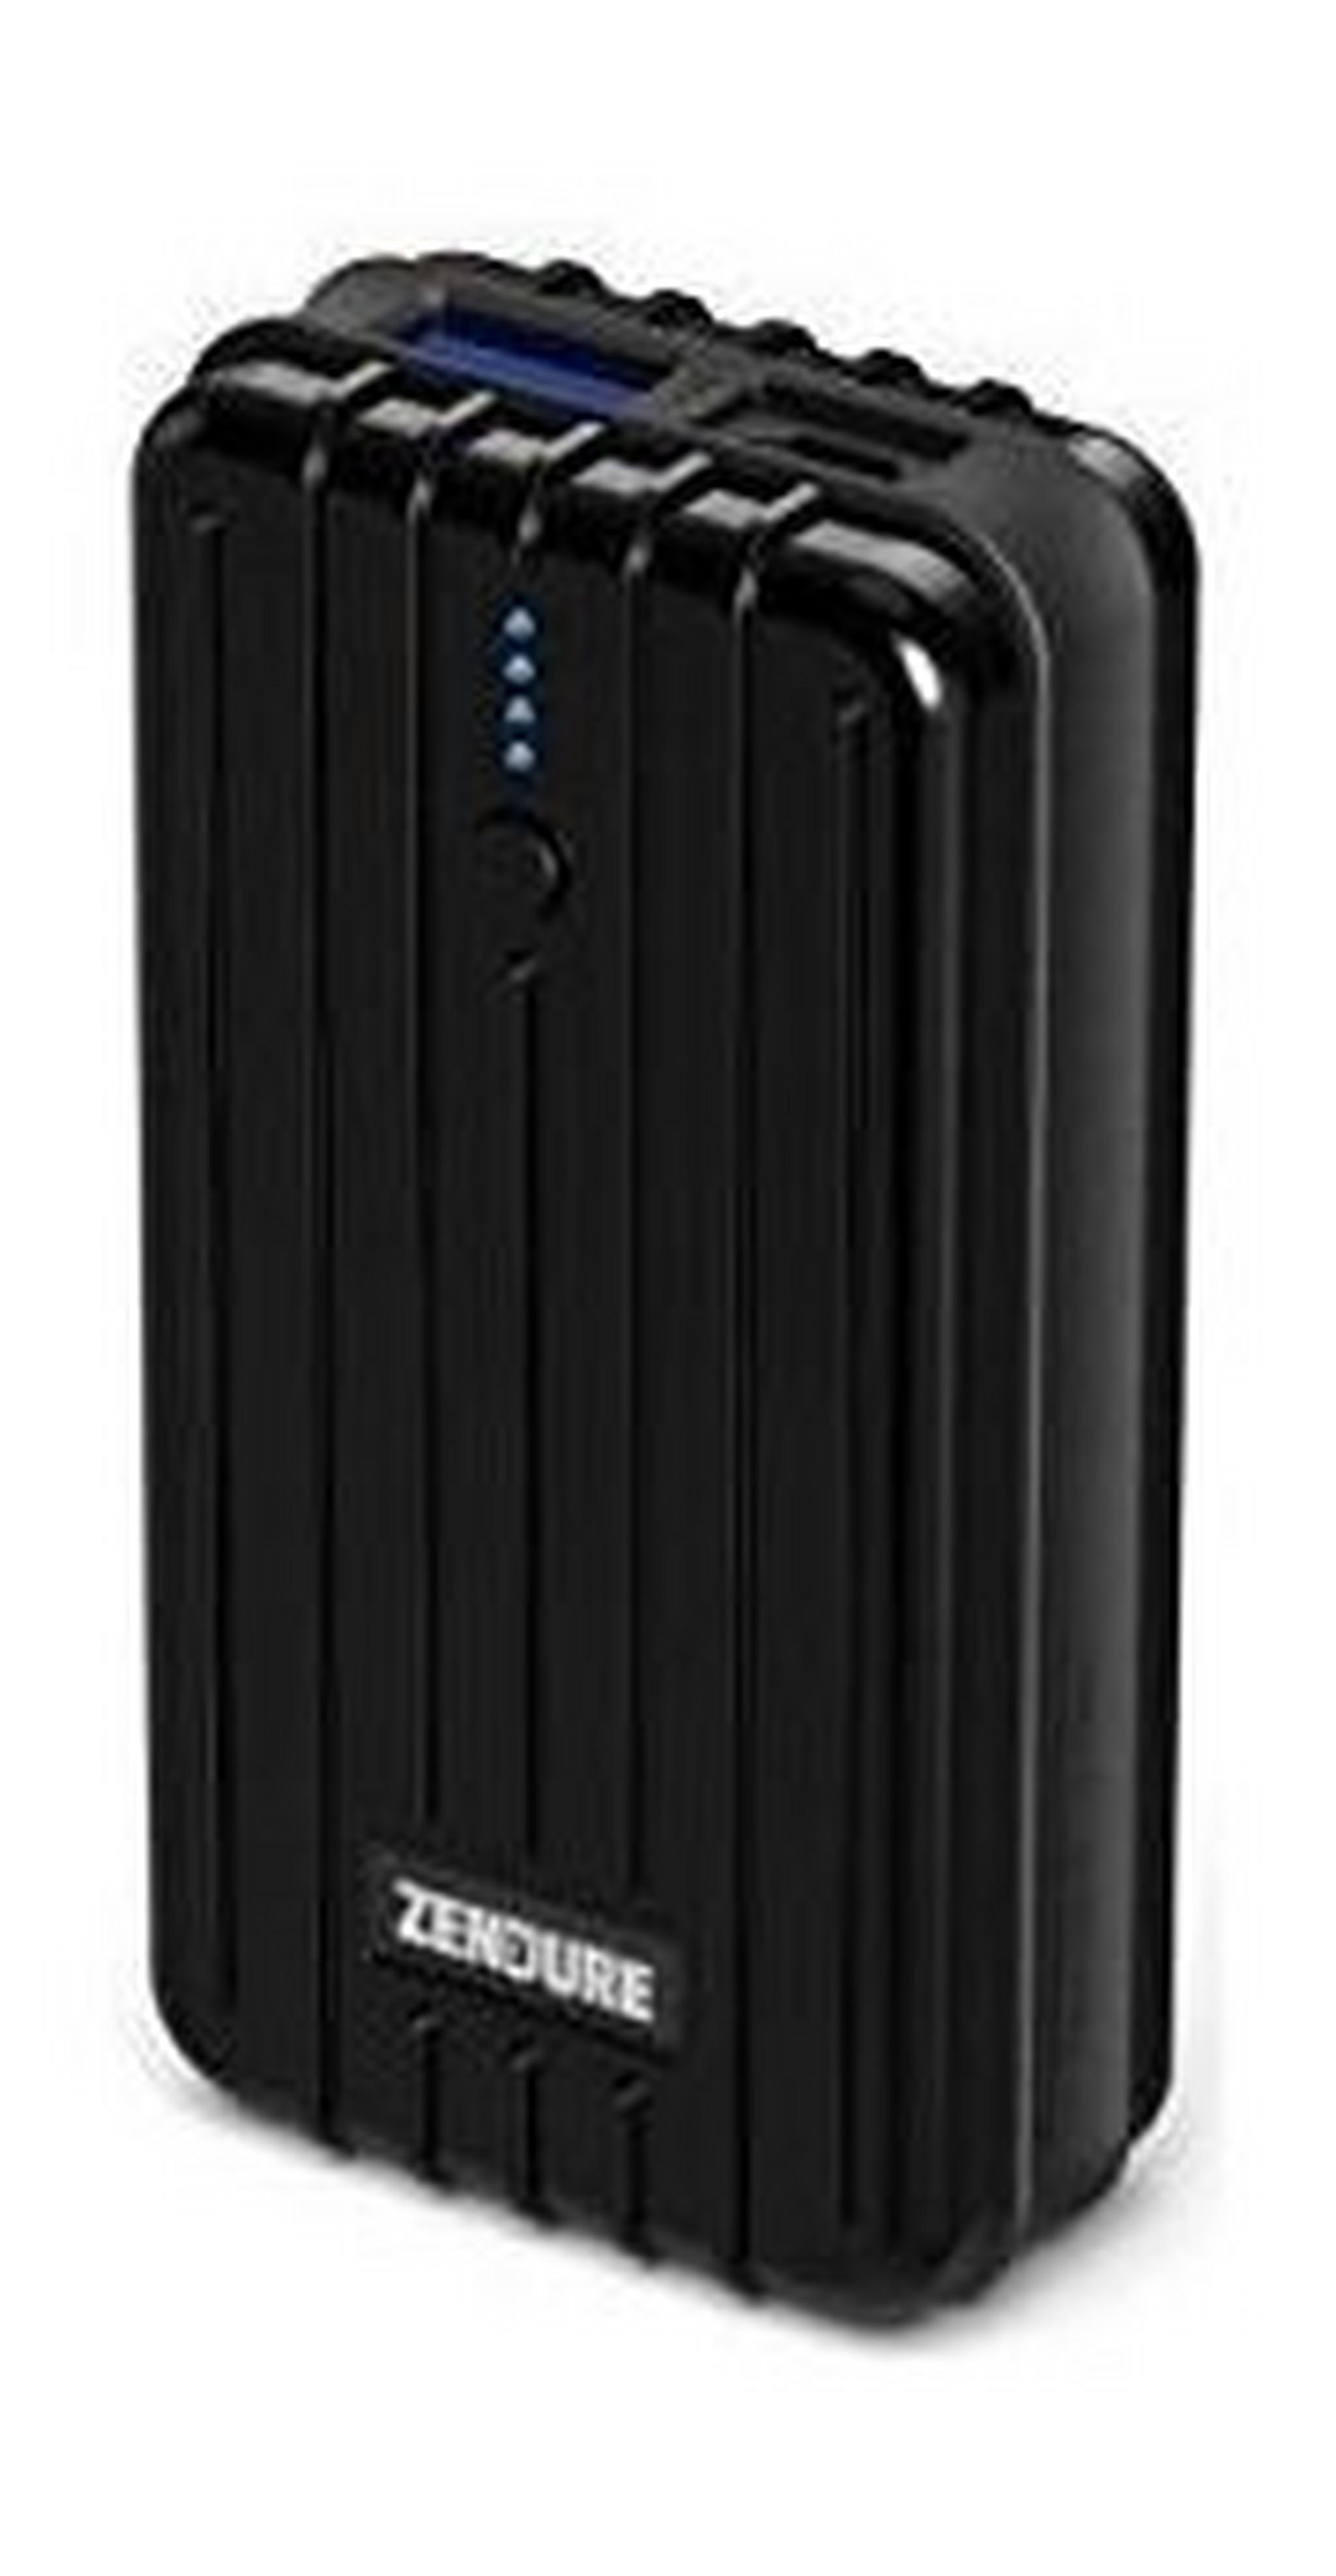 Zendure A3 Portable Power Bank 10,000 mAh - Black